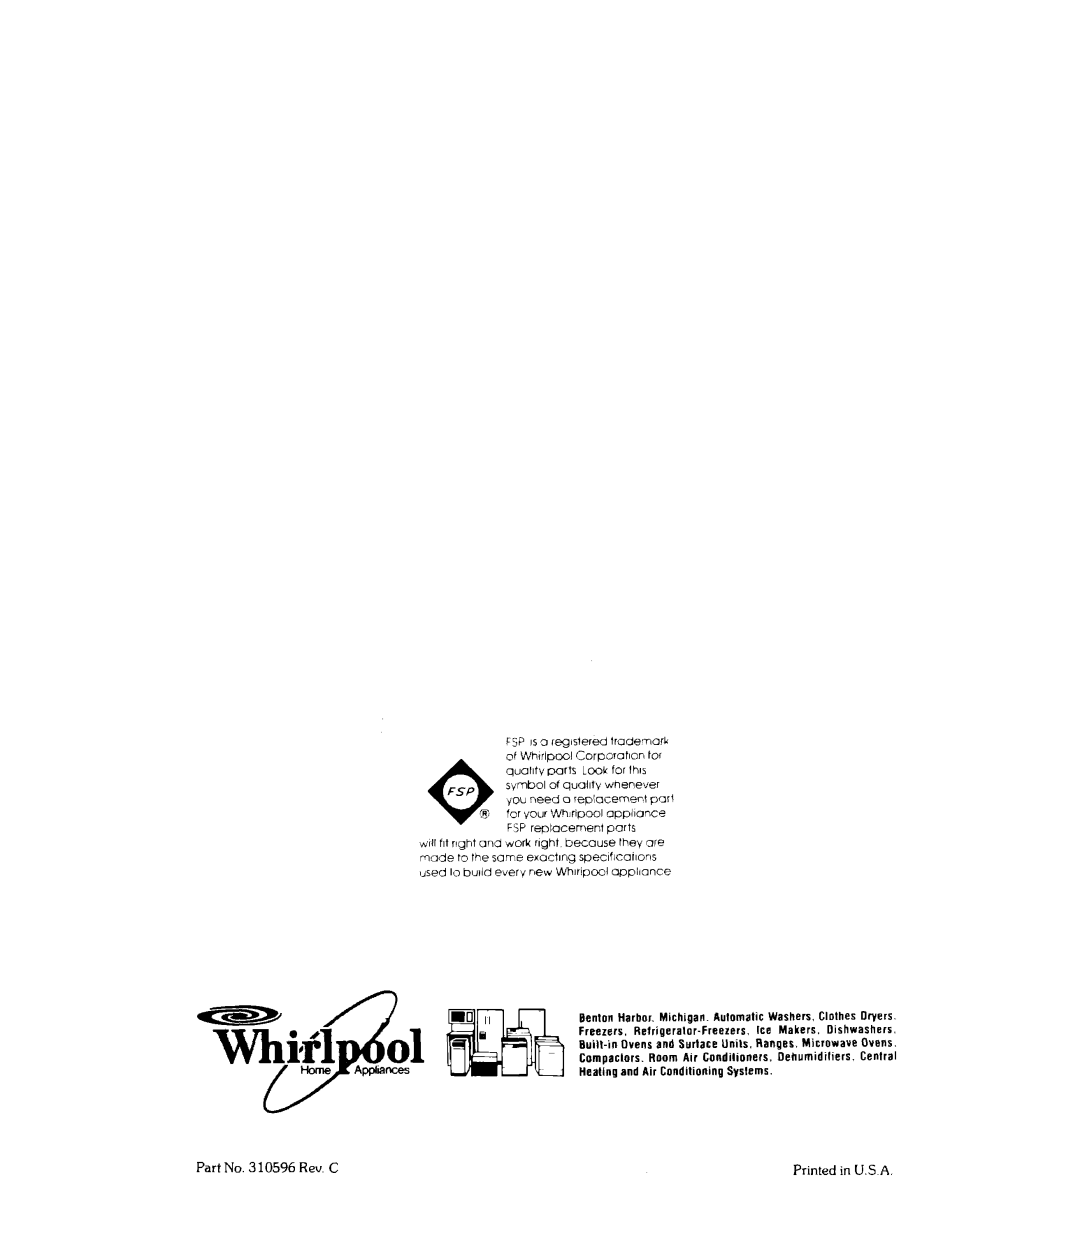 Whirlpool RJE-3165 manual of Whrrlpcol Corpomtlon lor 